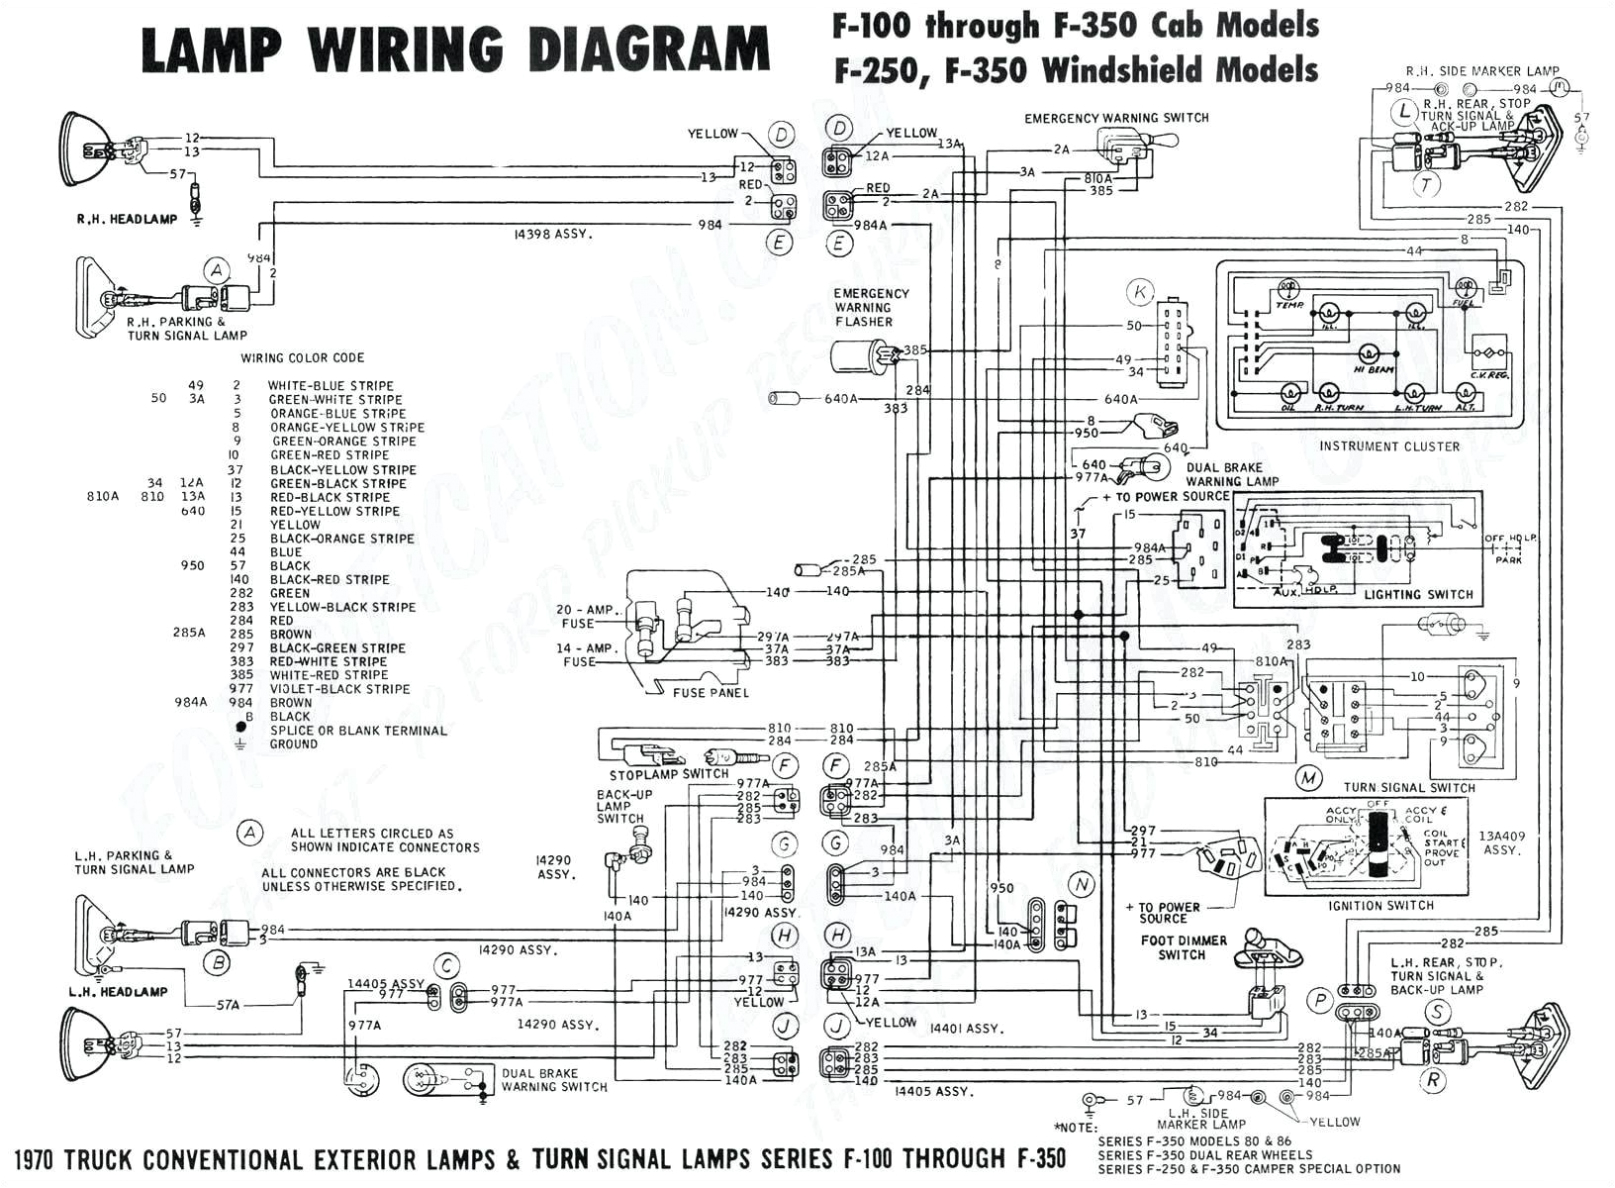 automotive wiring cadillac tagged cadillac circuit diagram cadillac wiring diagram free download schematic wiring diagram automotive